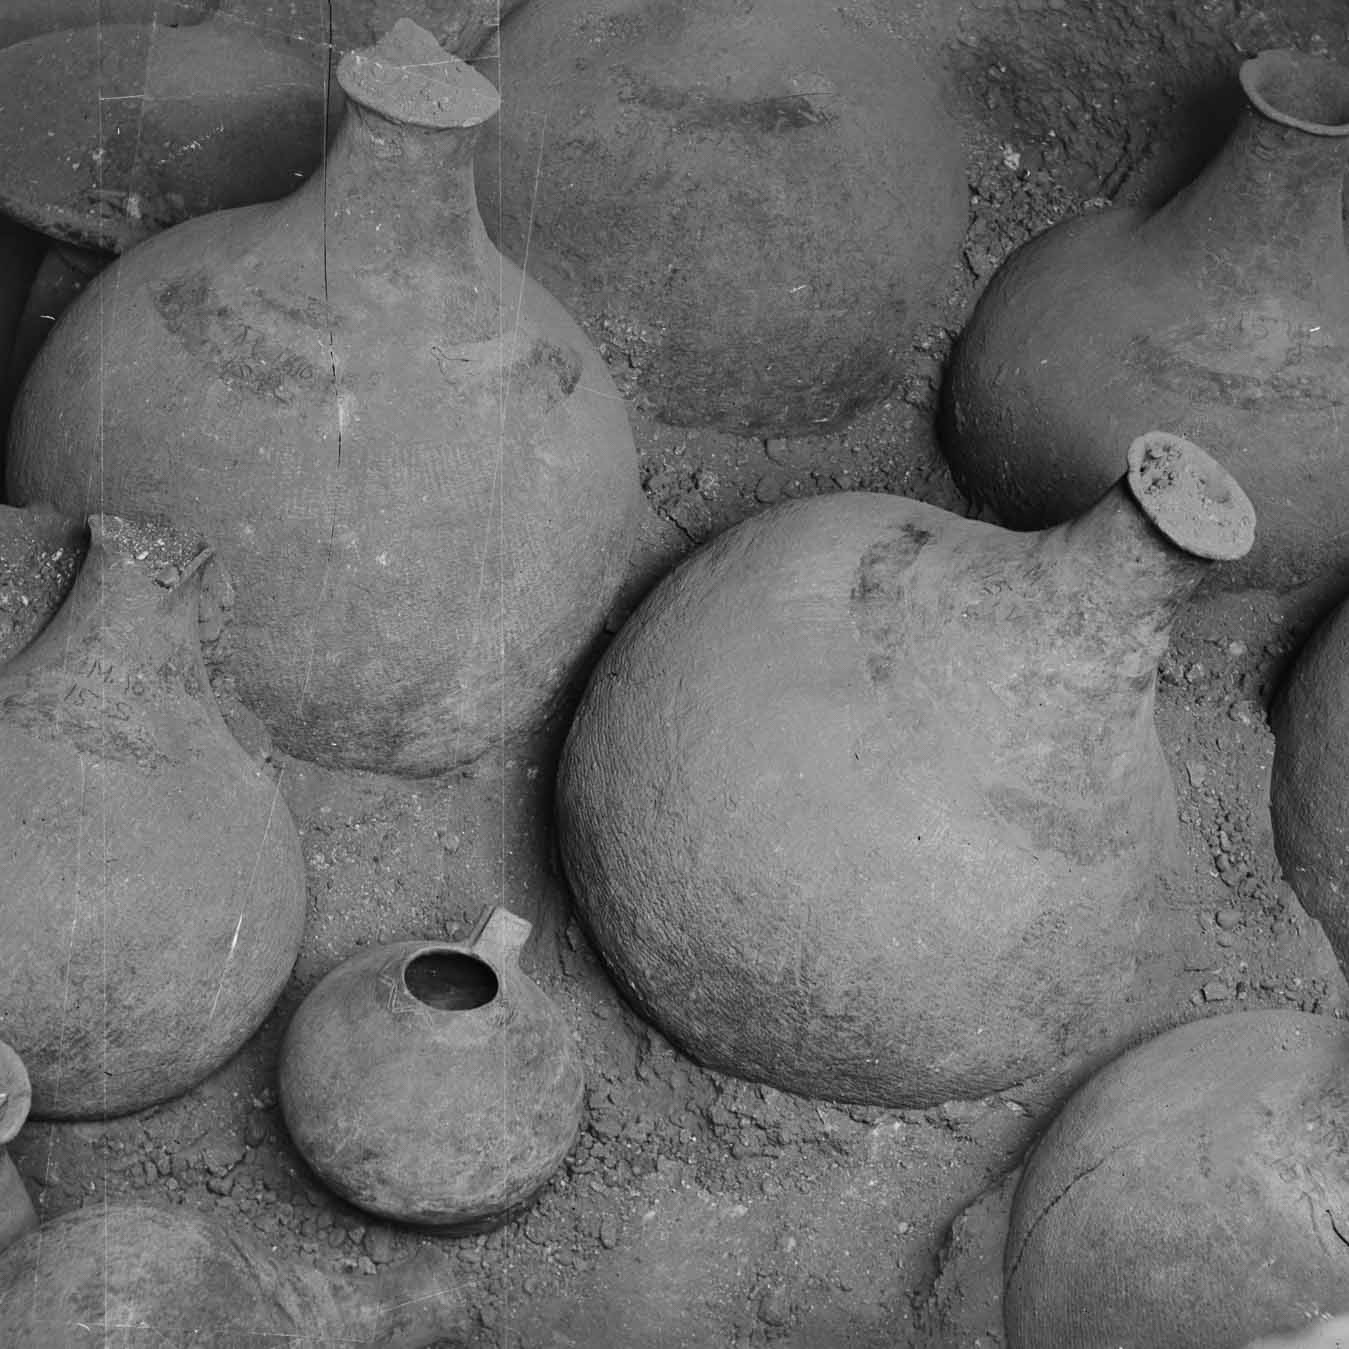 Black and white photo of very large ceramic bottles